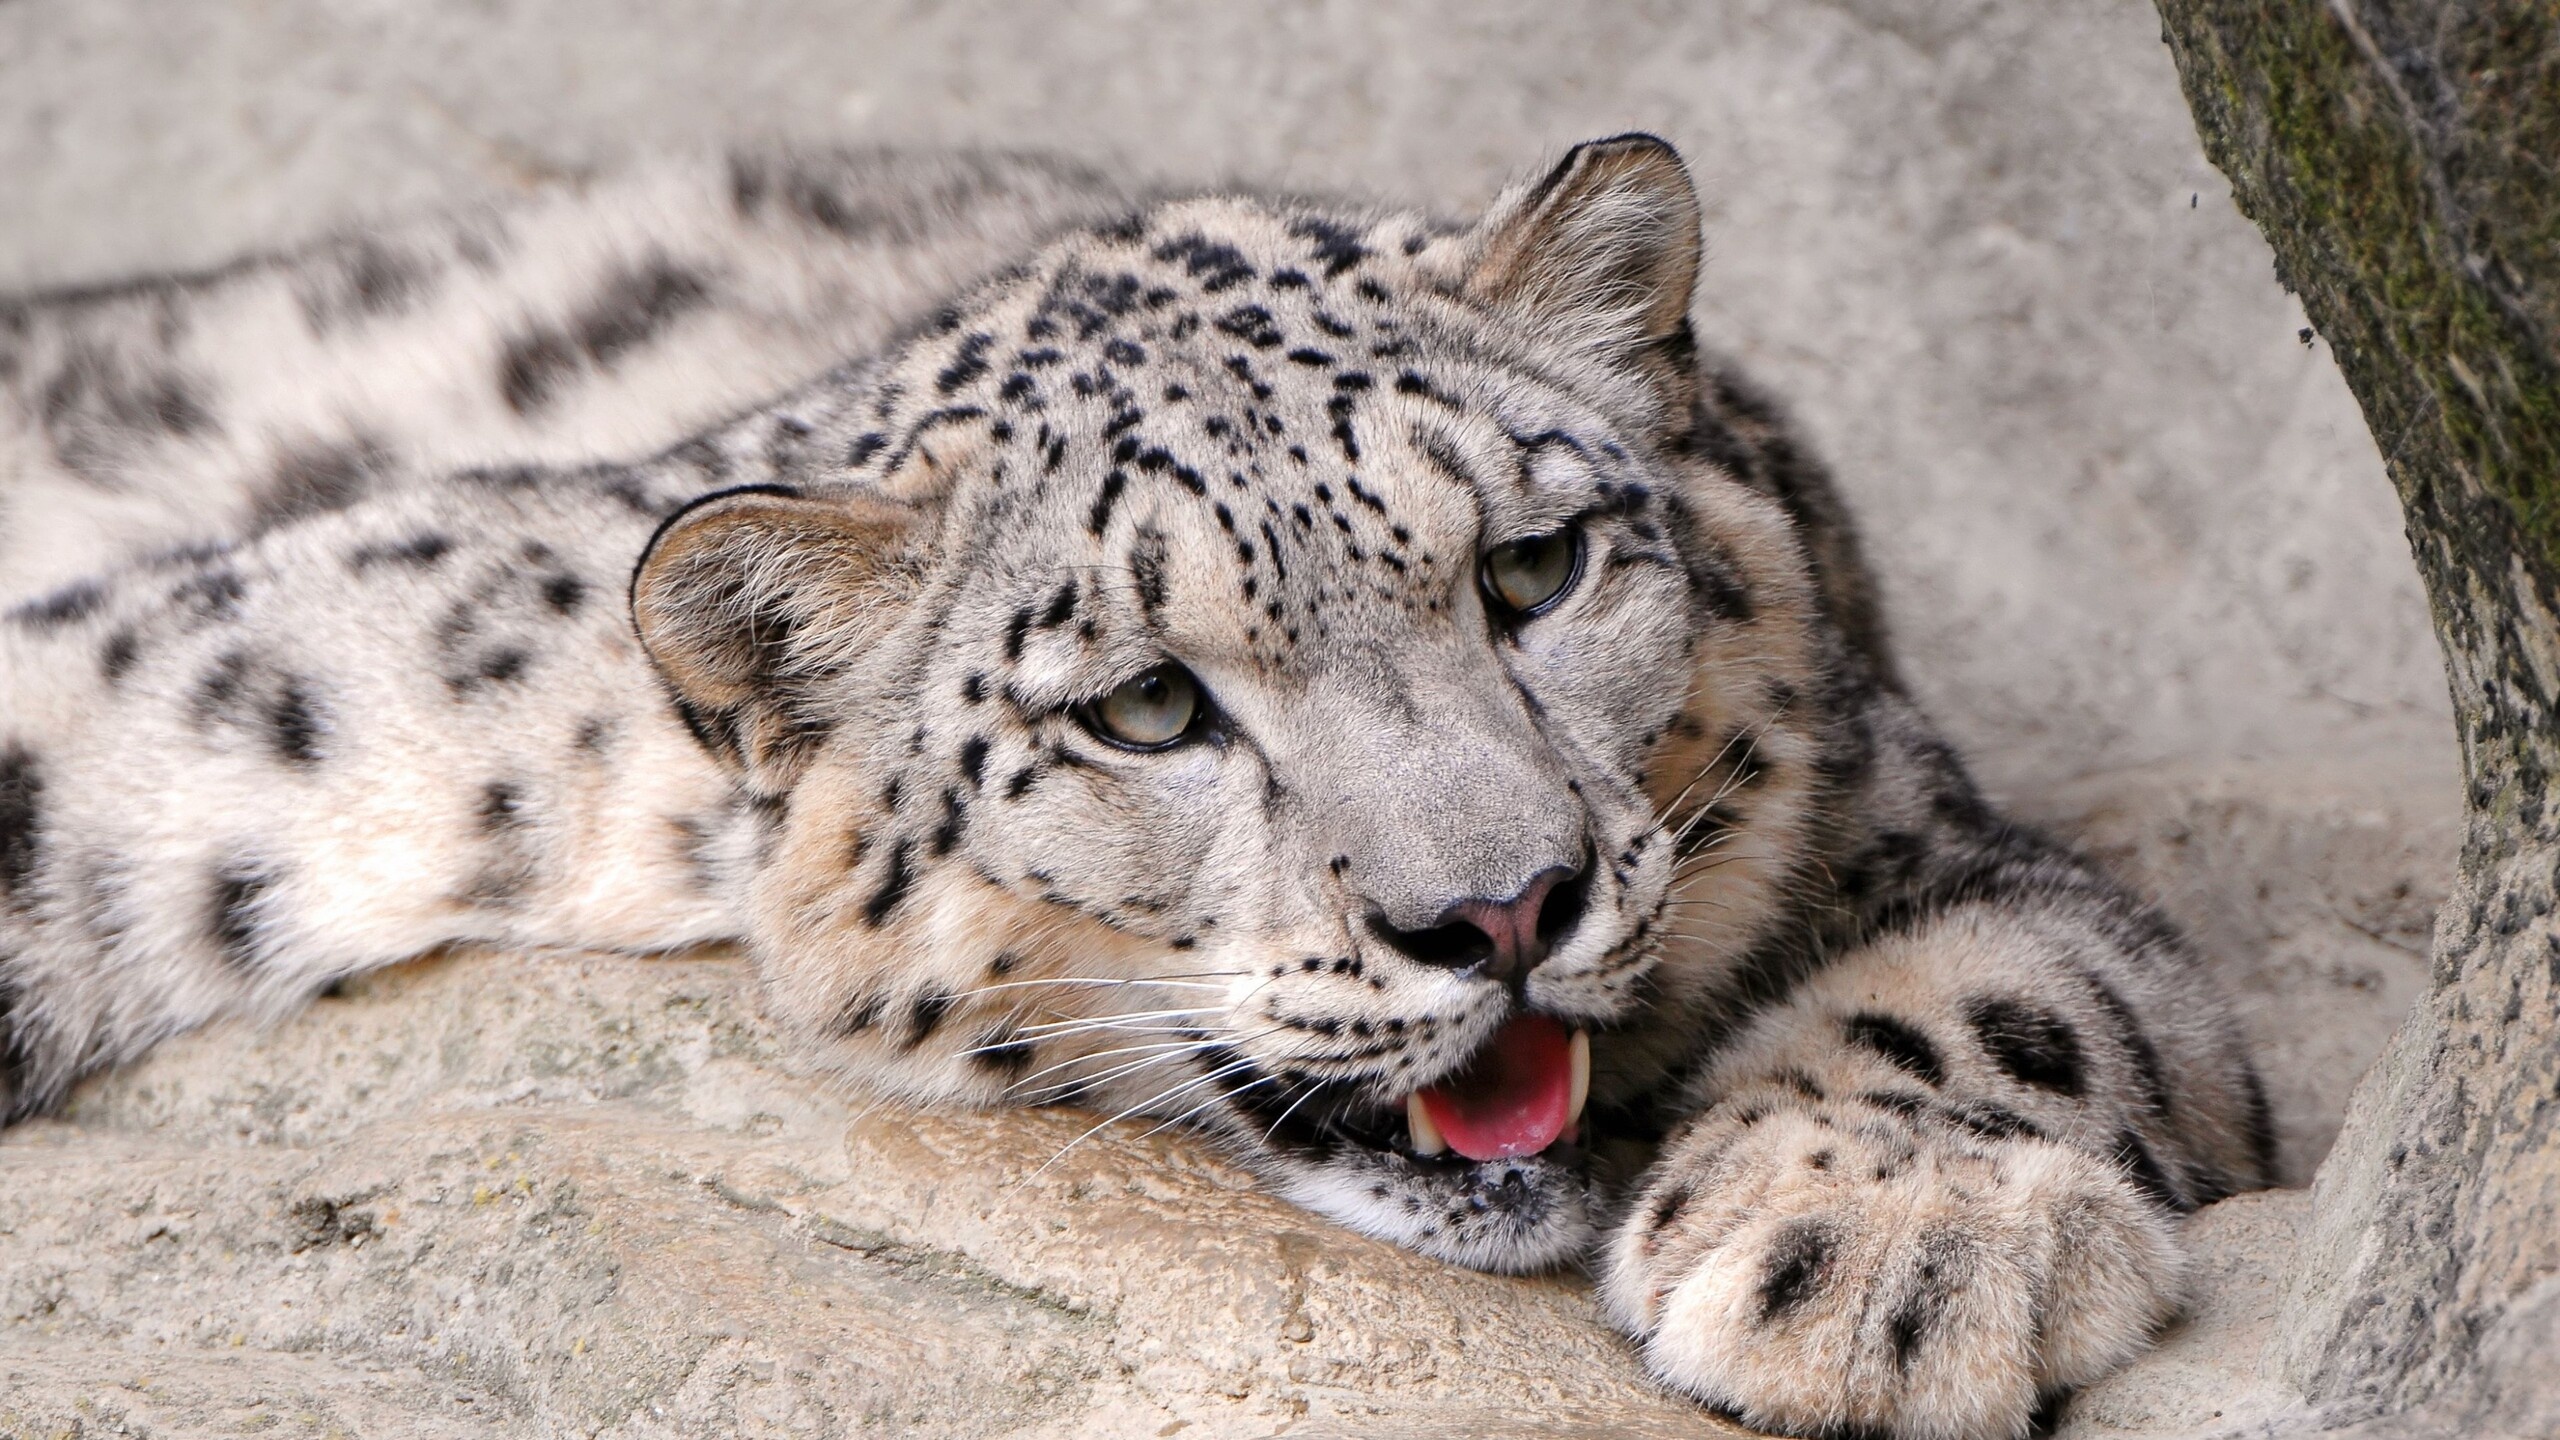 Snow leopard 1440p resolution, Wallpapers images photos, 2560x1440 HD Desktop